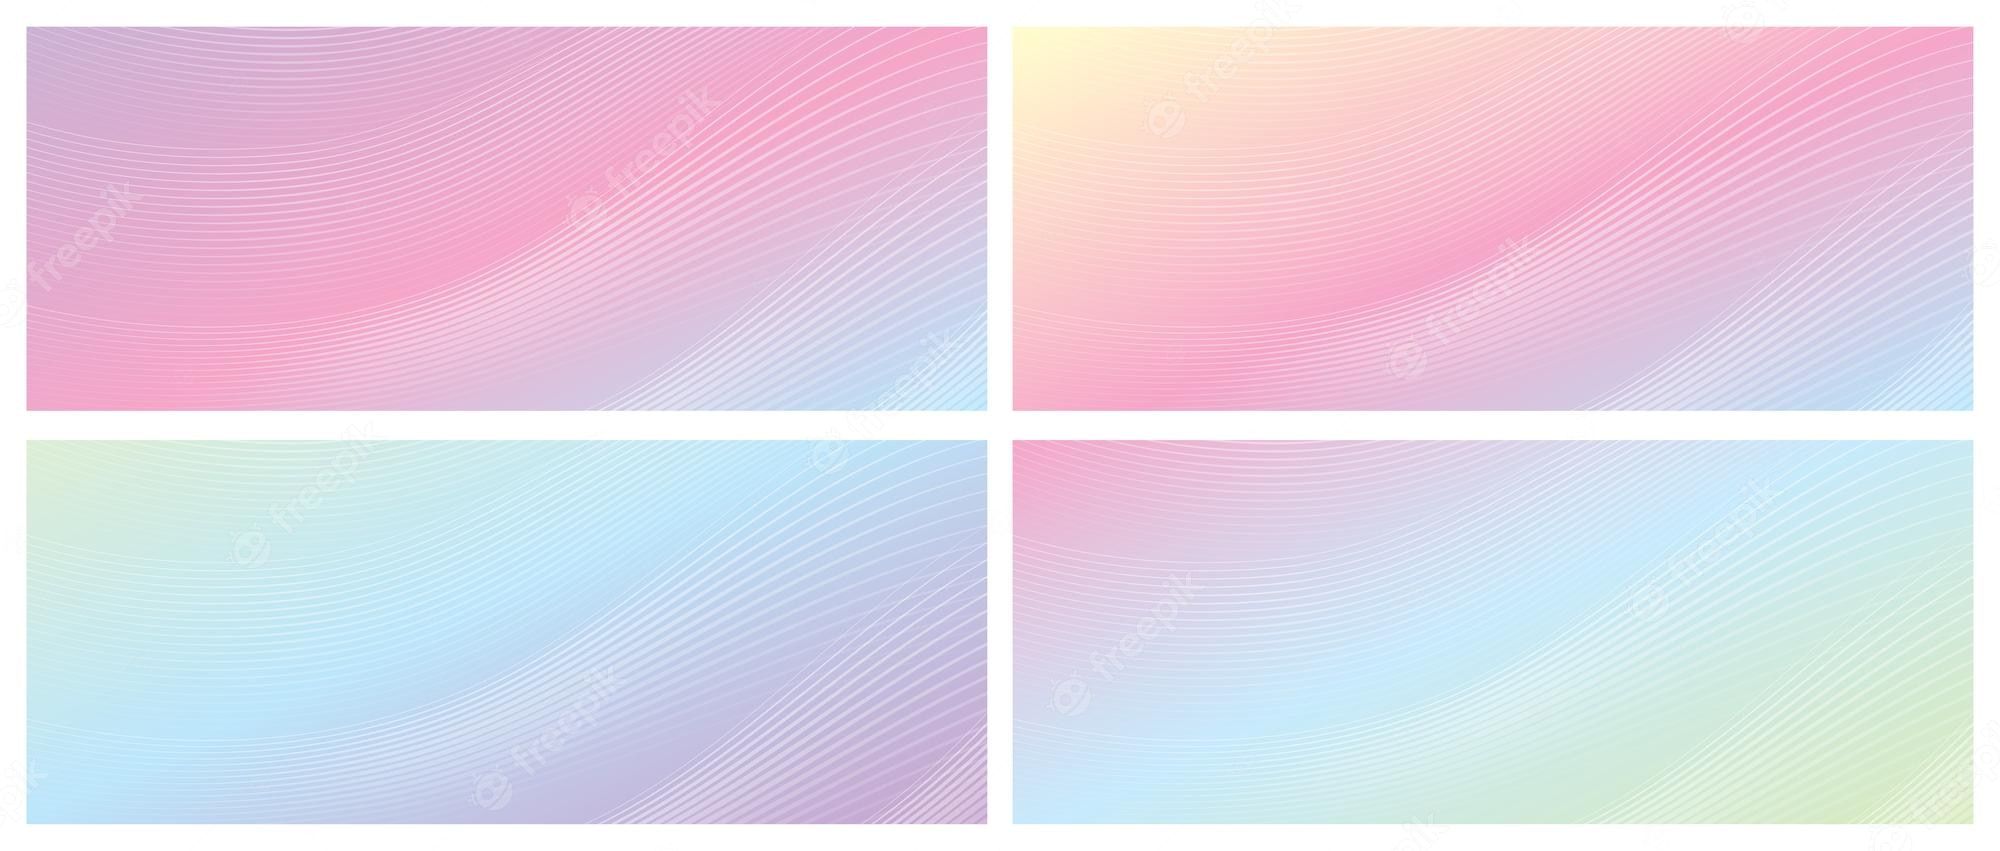 Pastel rainbow wallpaper Image. Free Vectors, & PSD